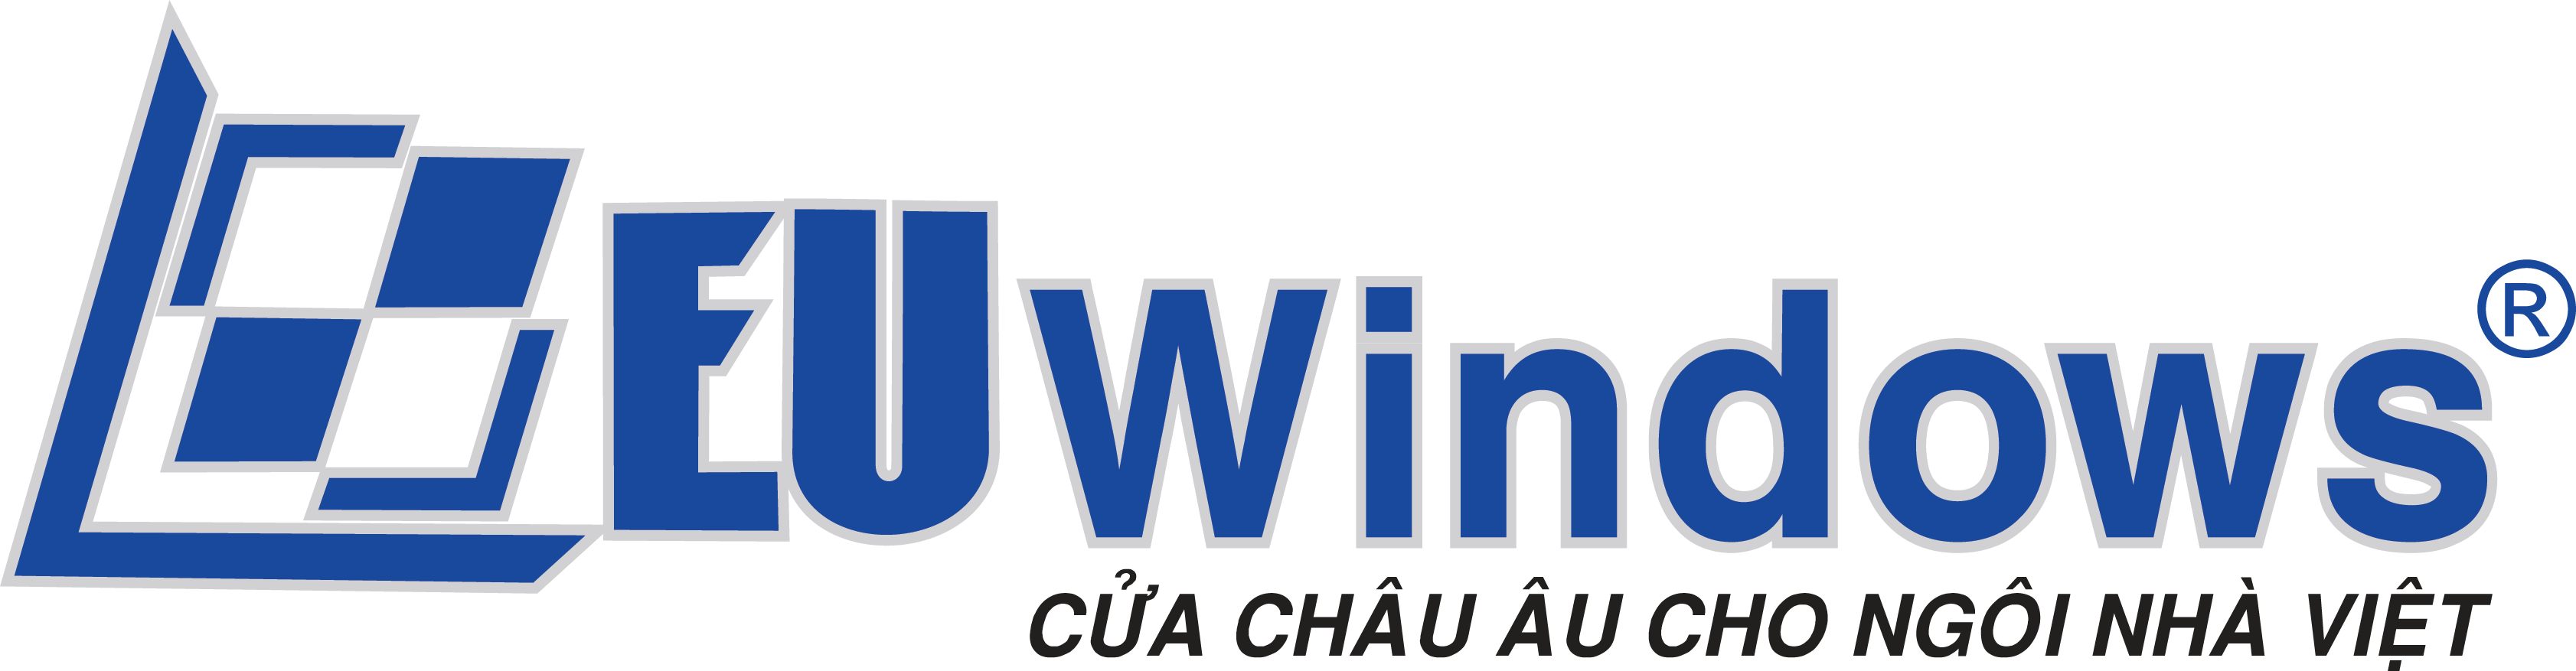 Logo San Xuat Cua Chau Au Joint Stock Company